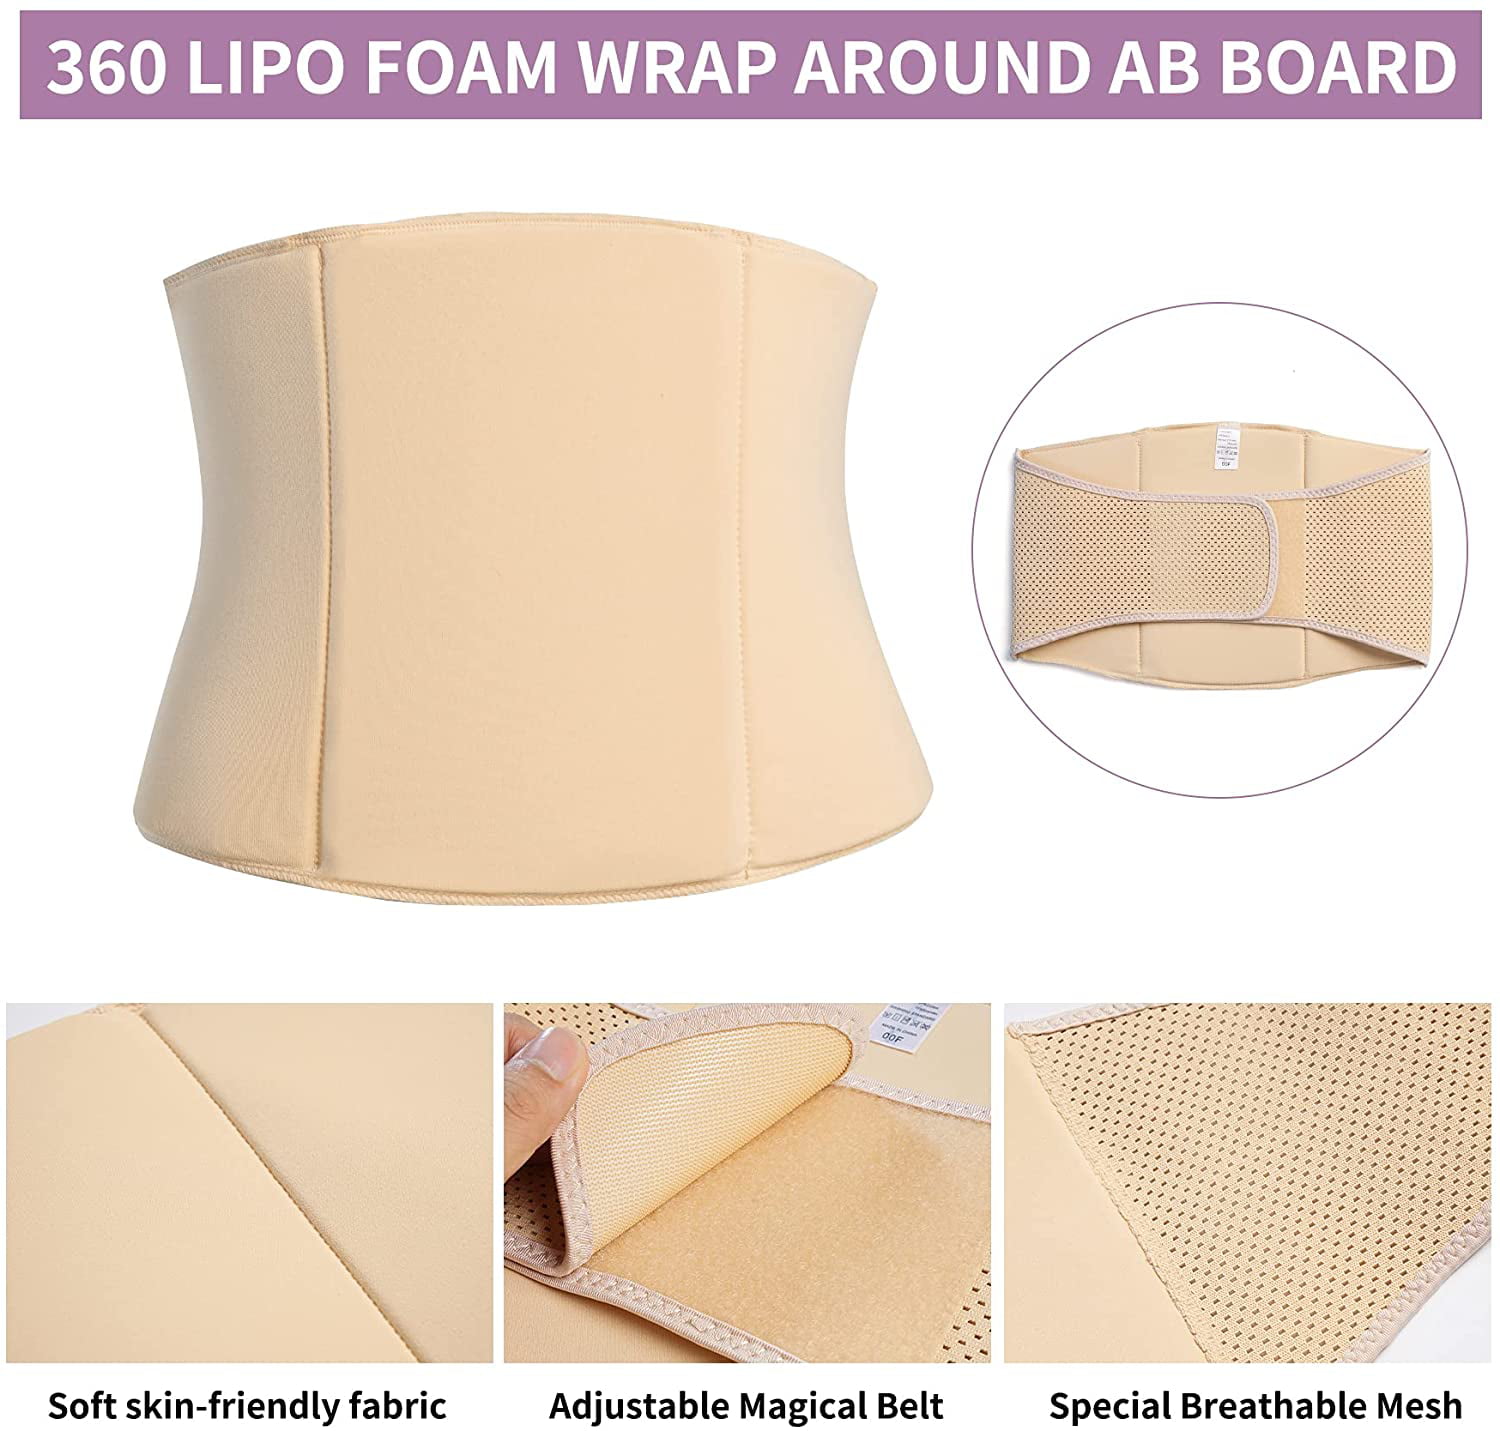 360 Lipo Foam Board – MyBodySnatcher